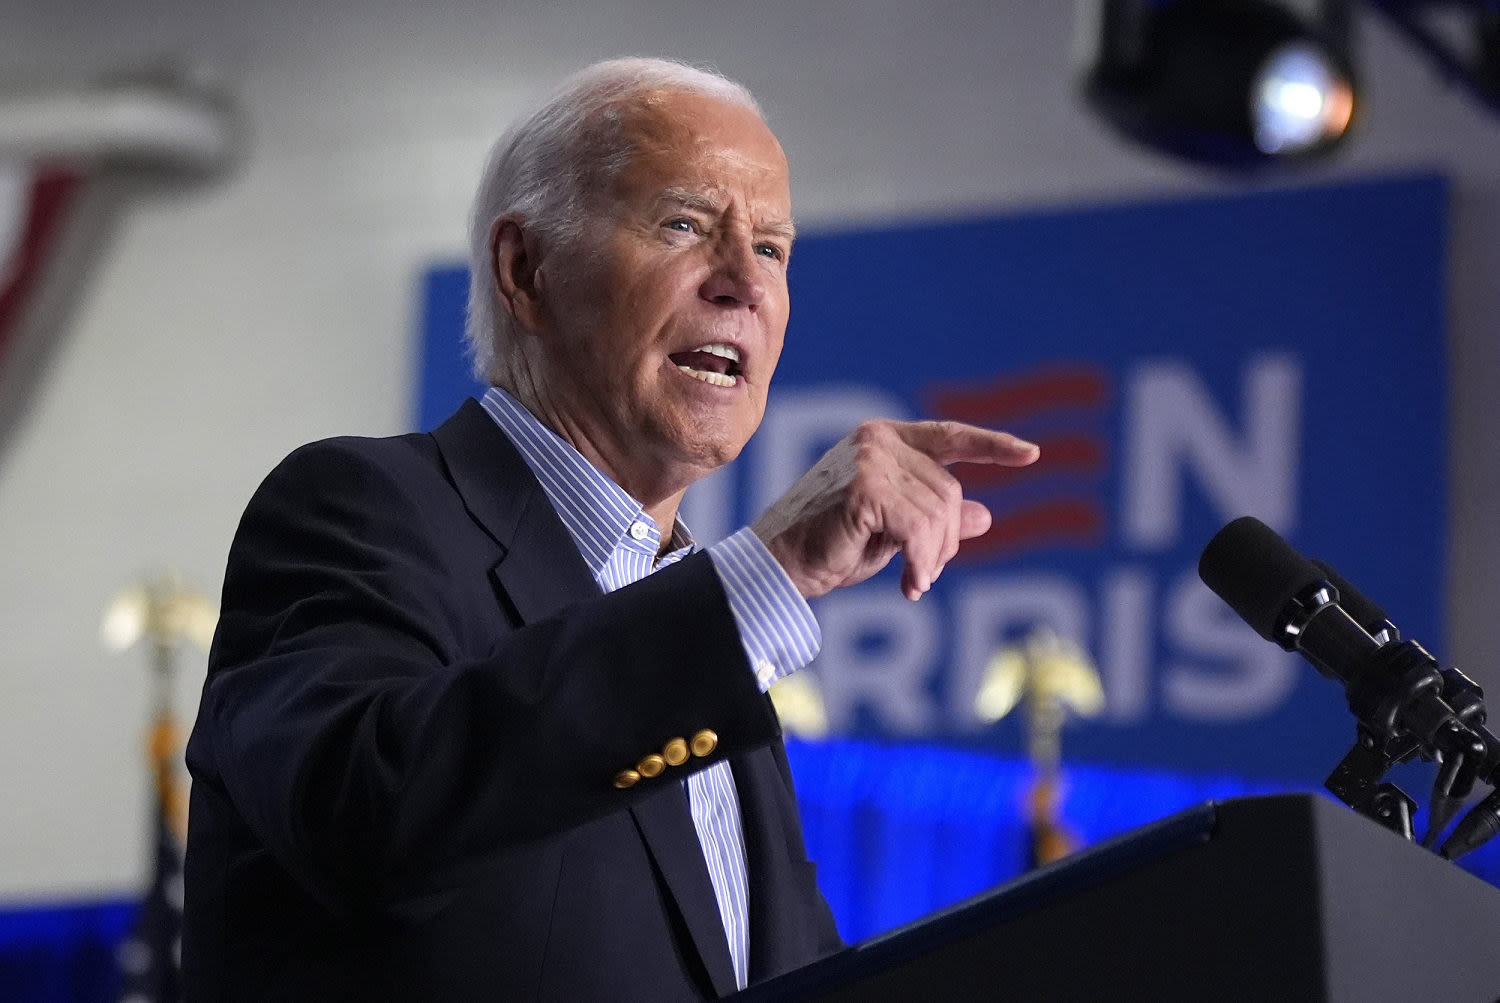 Biden slows Democratic defections, but concerns remain: From the Politics Desk